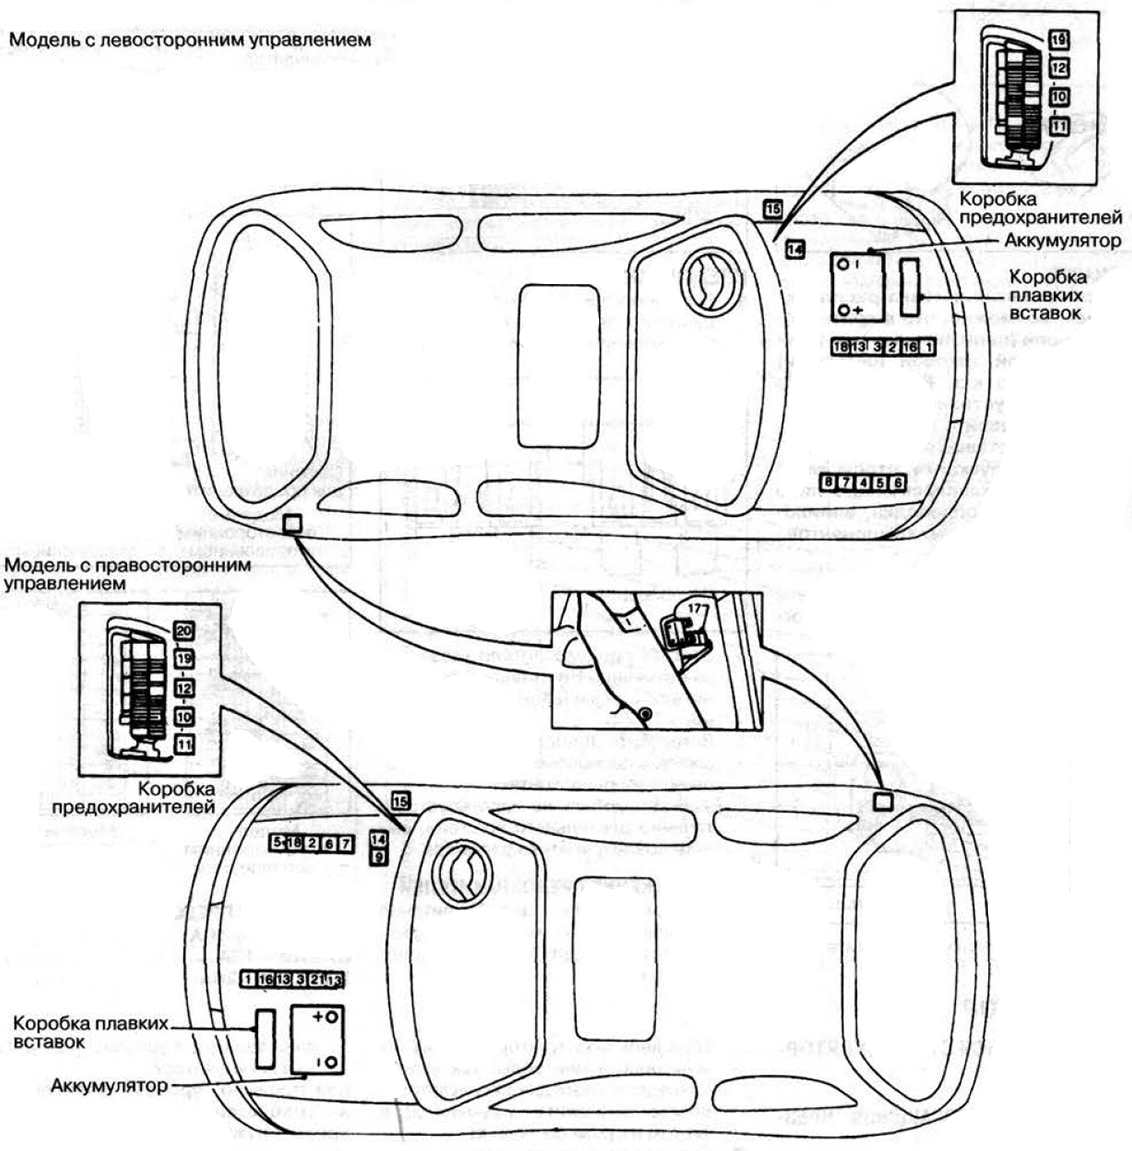 Nissan Micra K11 (1992-2002) - caja de fusibles y relés